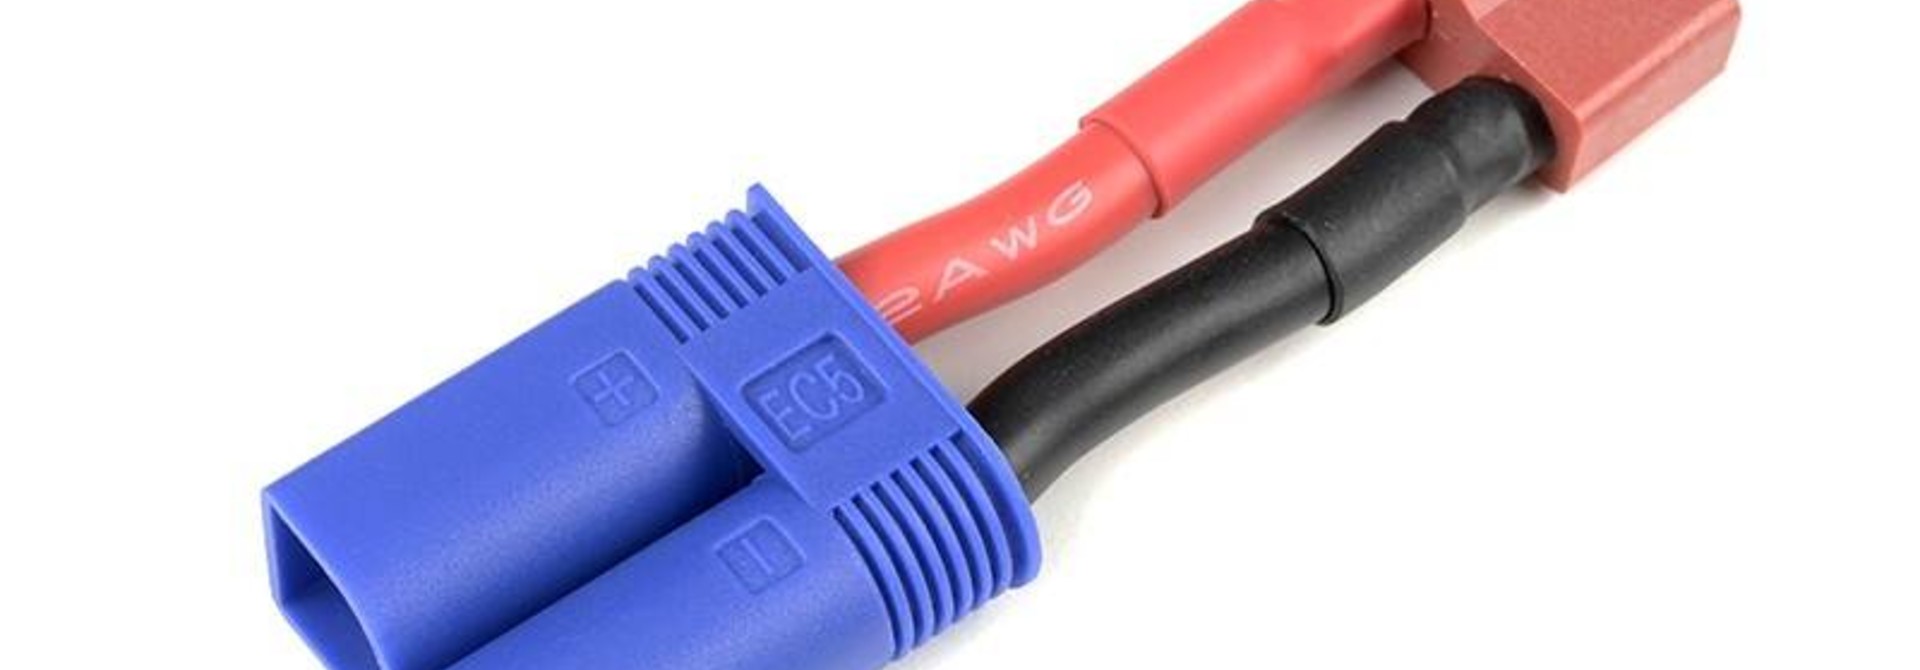 Revtec - Power adapterkabel - Deans connector man.  EC-5 connector man. - 12AWG Siliconen-kabel - 1 st